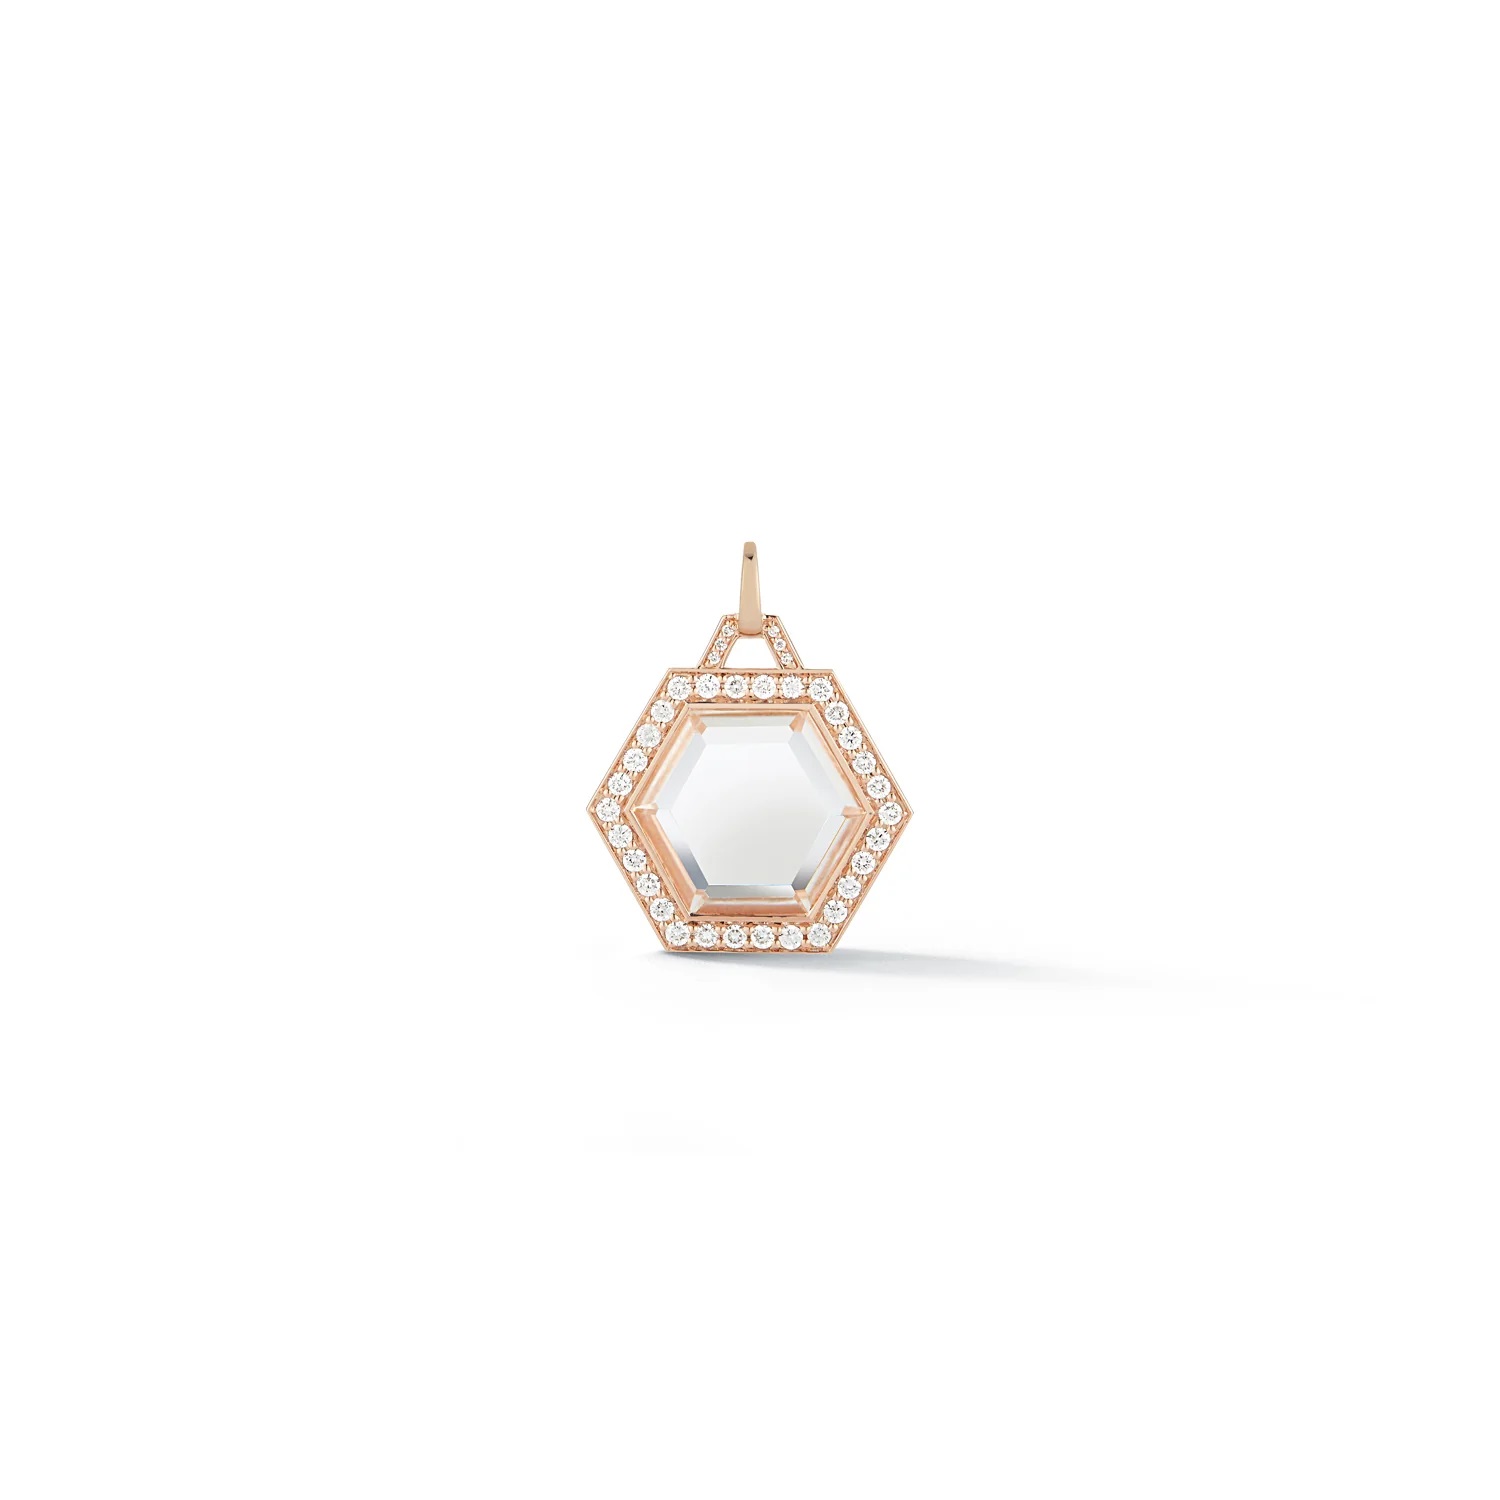 Walter's Faith 18kt Rose Gold, Pave Diamond and Rock Crystal Hexagon Charm